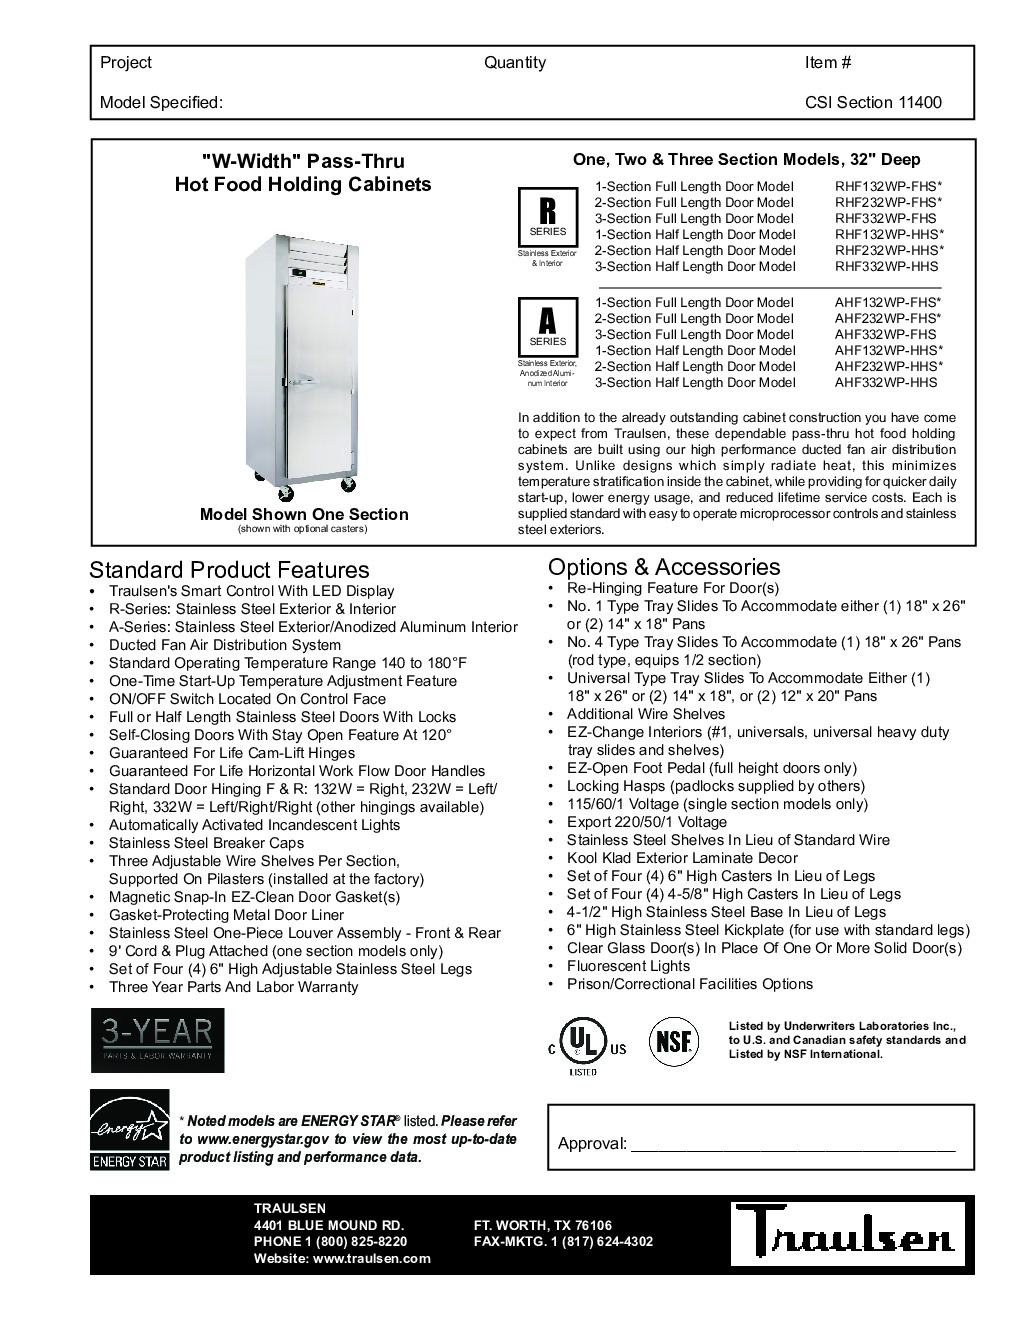 Traulsen RHF232WP-FHS Pass-Thru Heated Cabinet